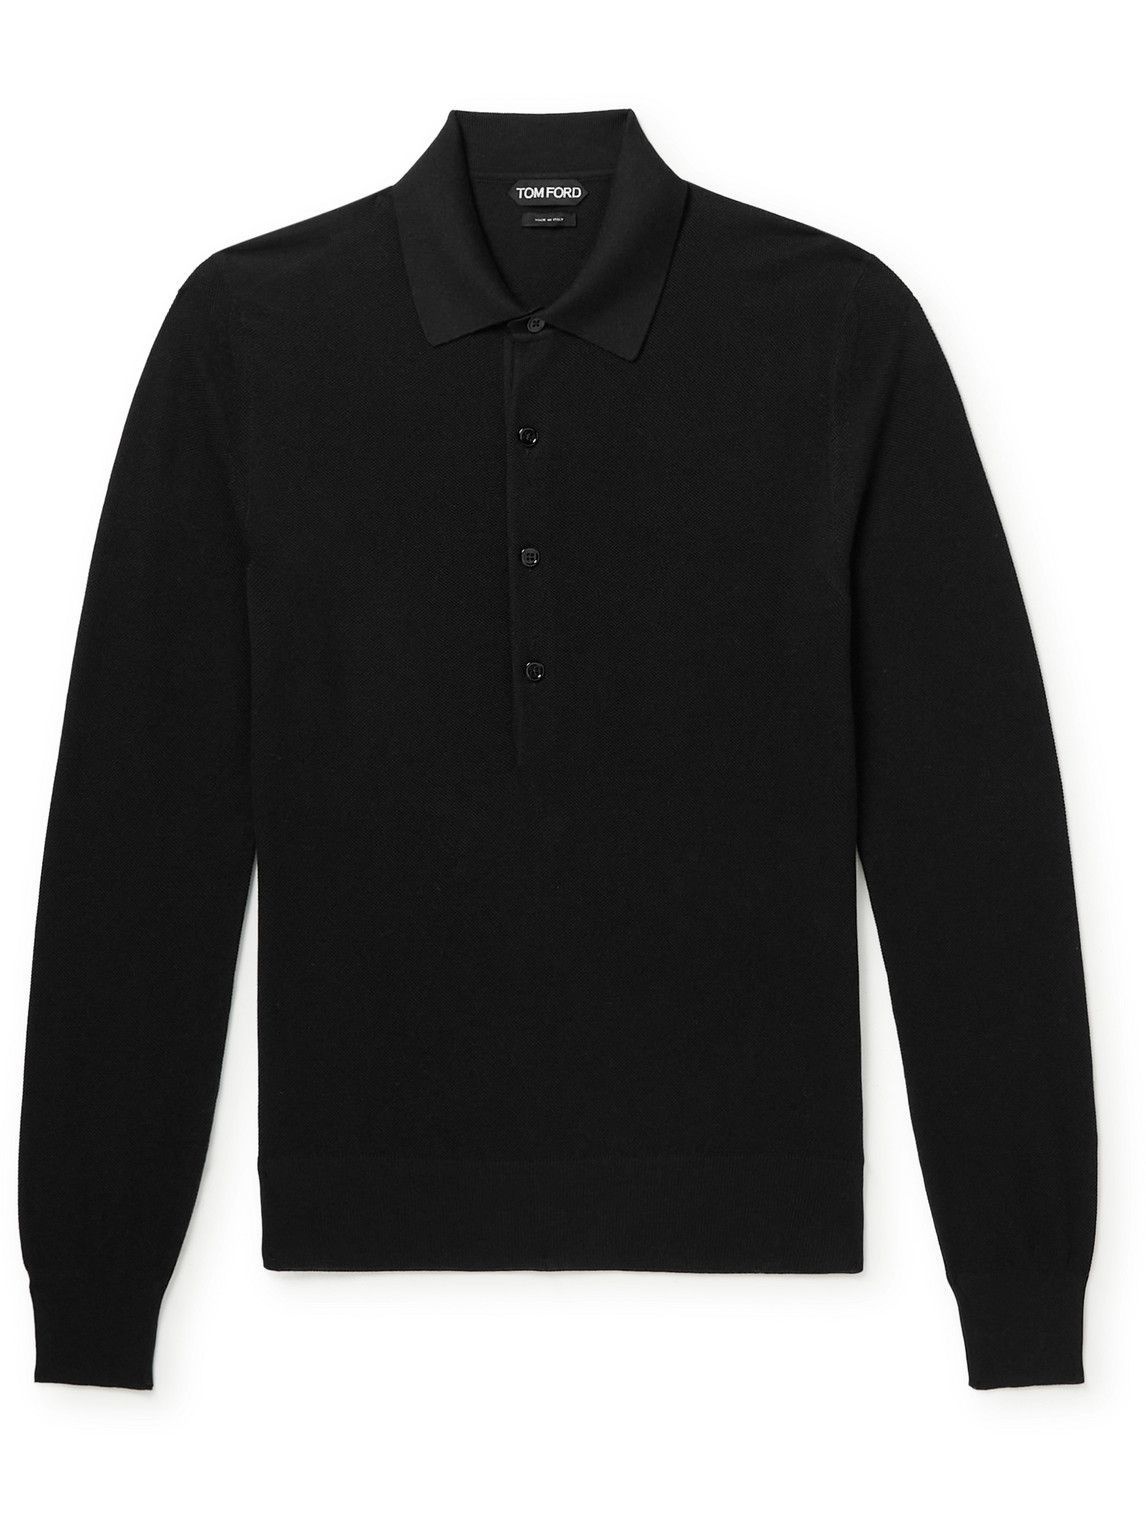 TOM FORD - Silk and Cotton-Blend Piqué Polo Shirt - Black TOM FORD